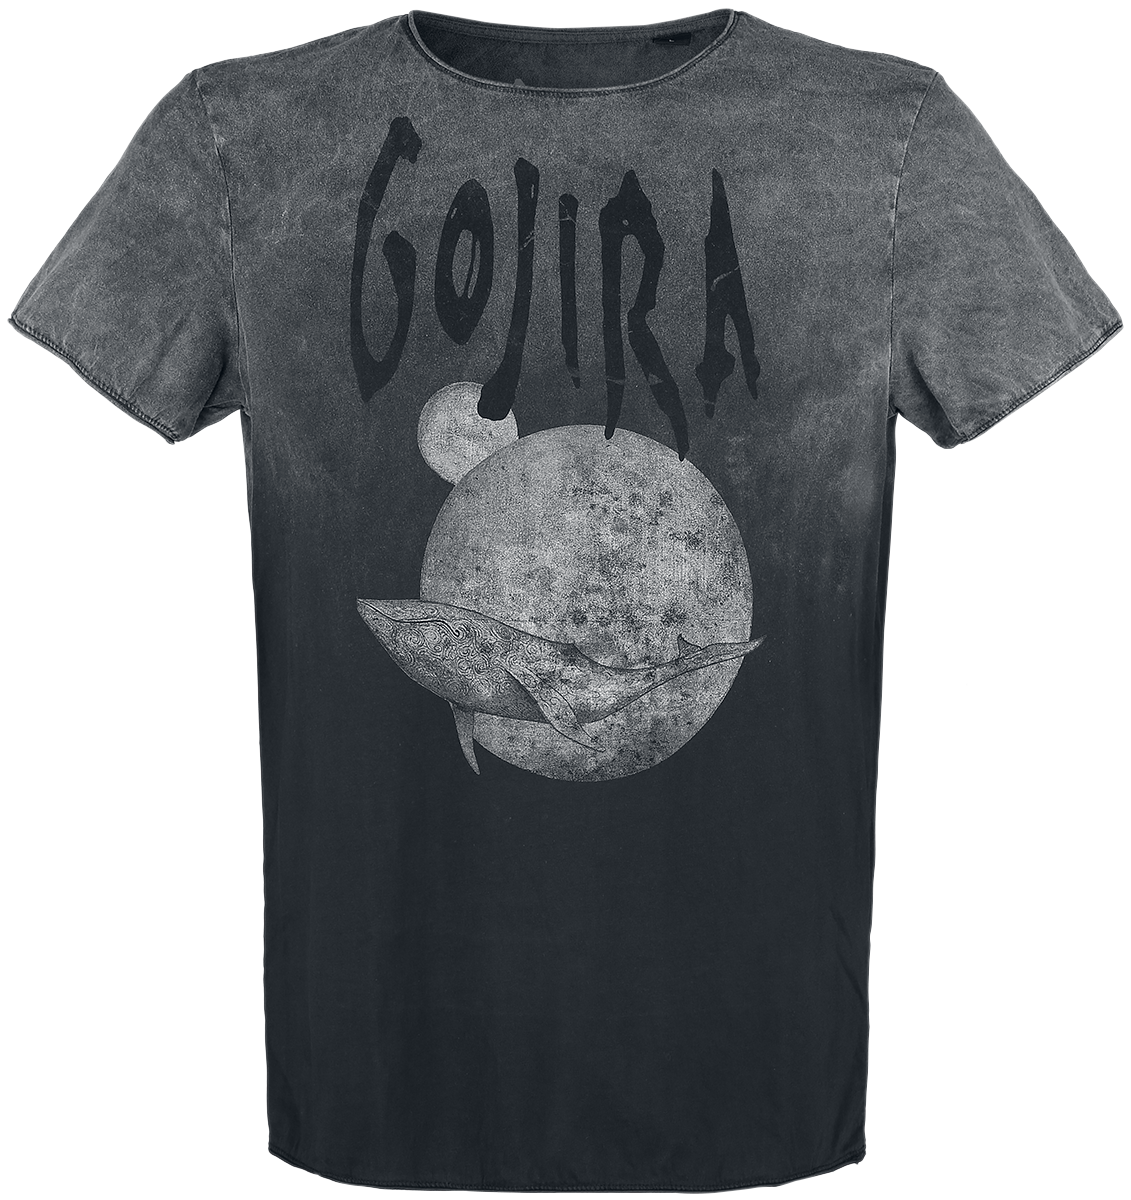 Gojira - From Mars Reprise - T-Shirt - dunkelgrau| grau